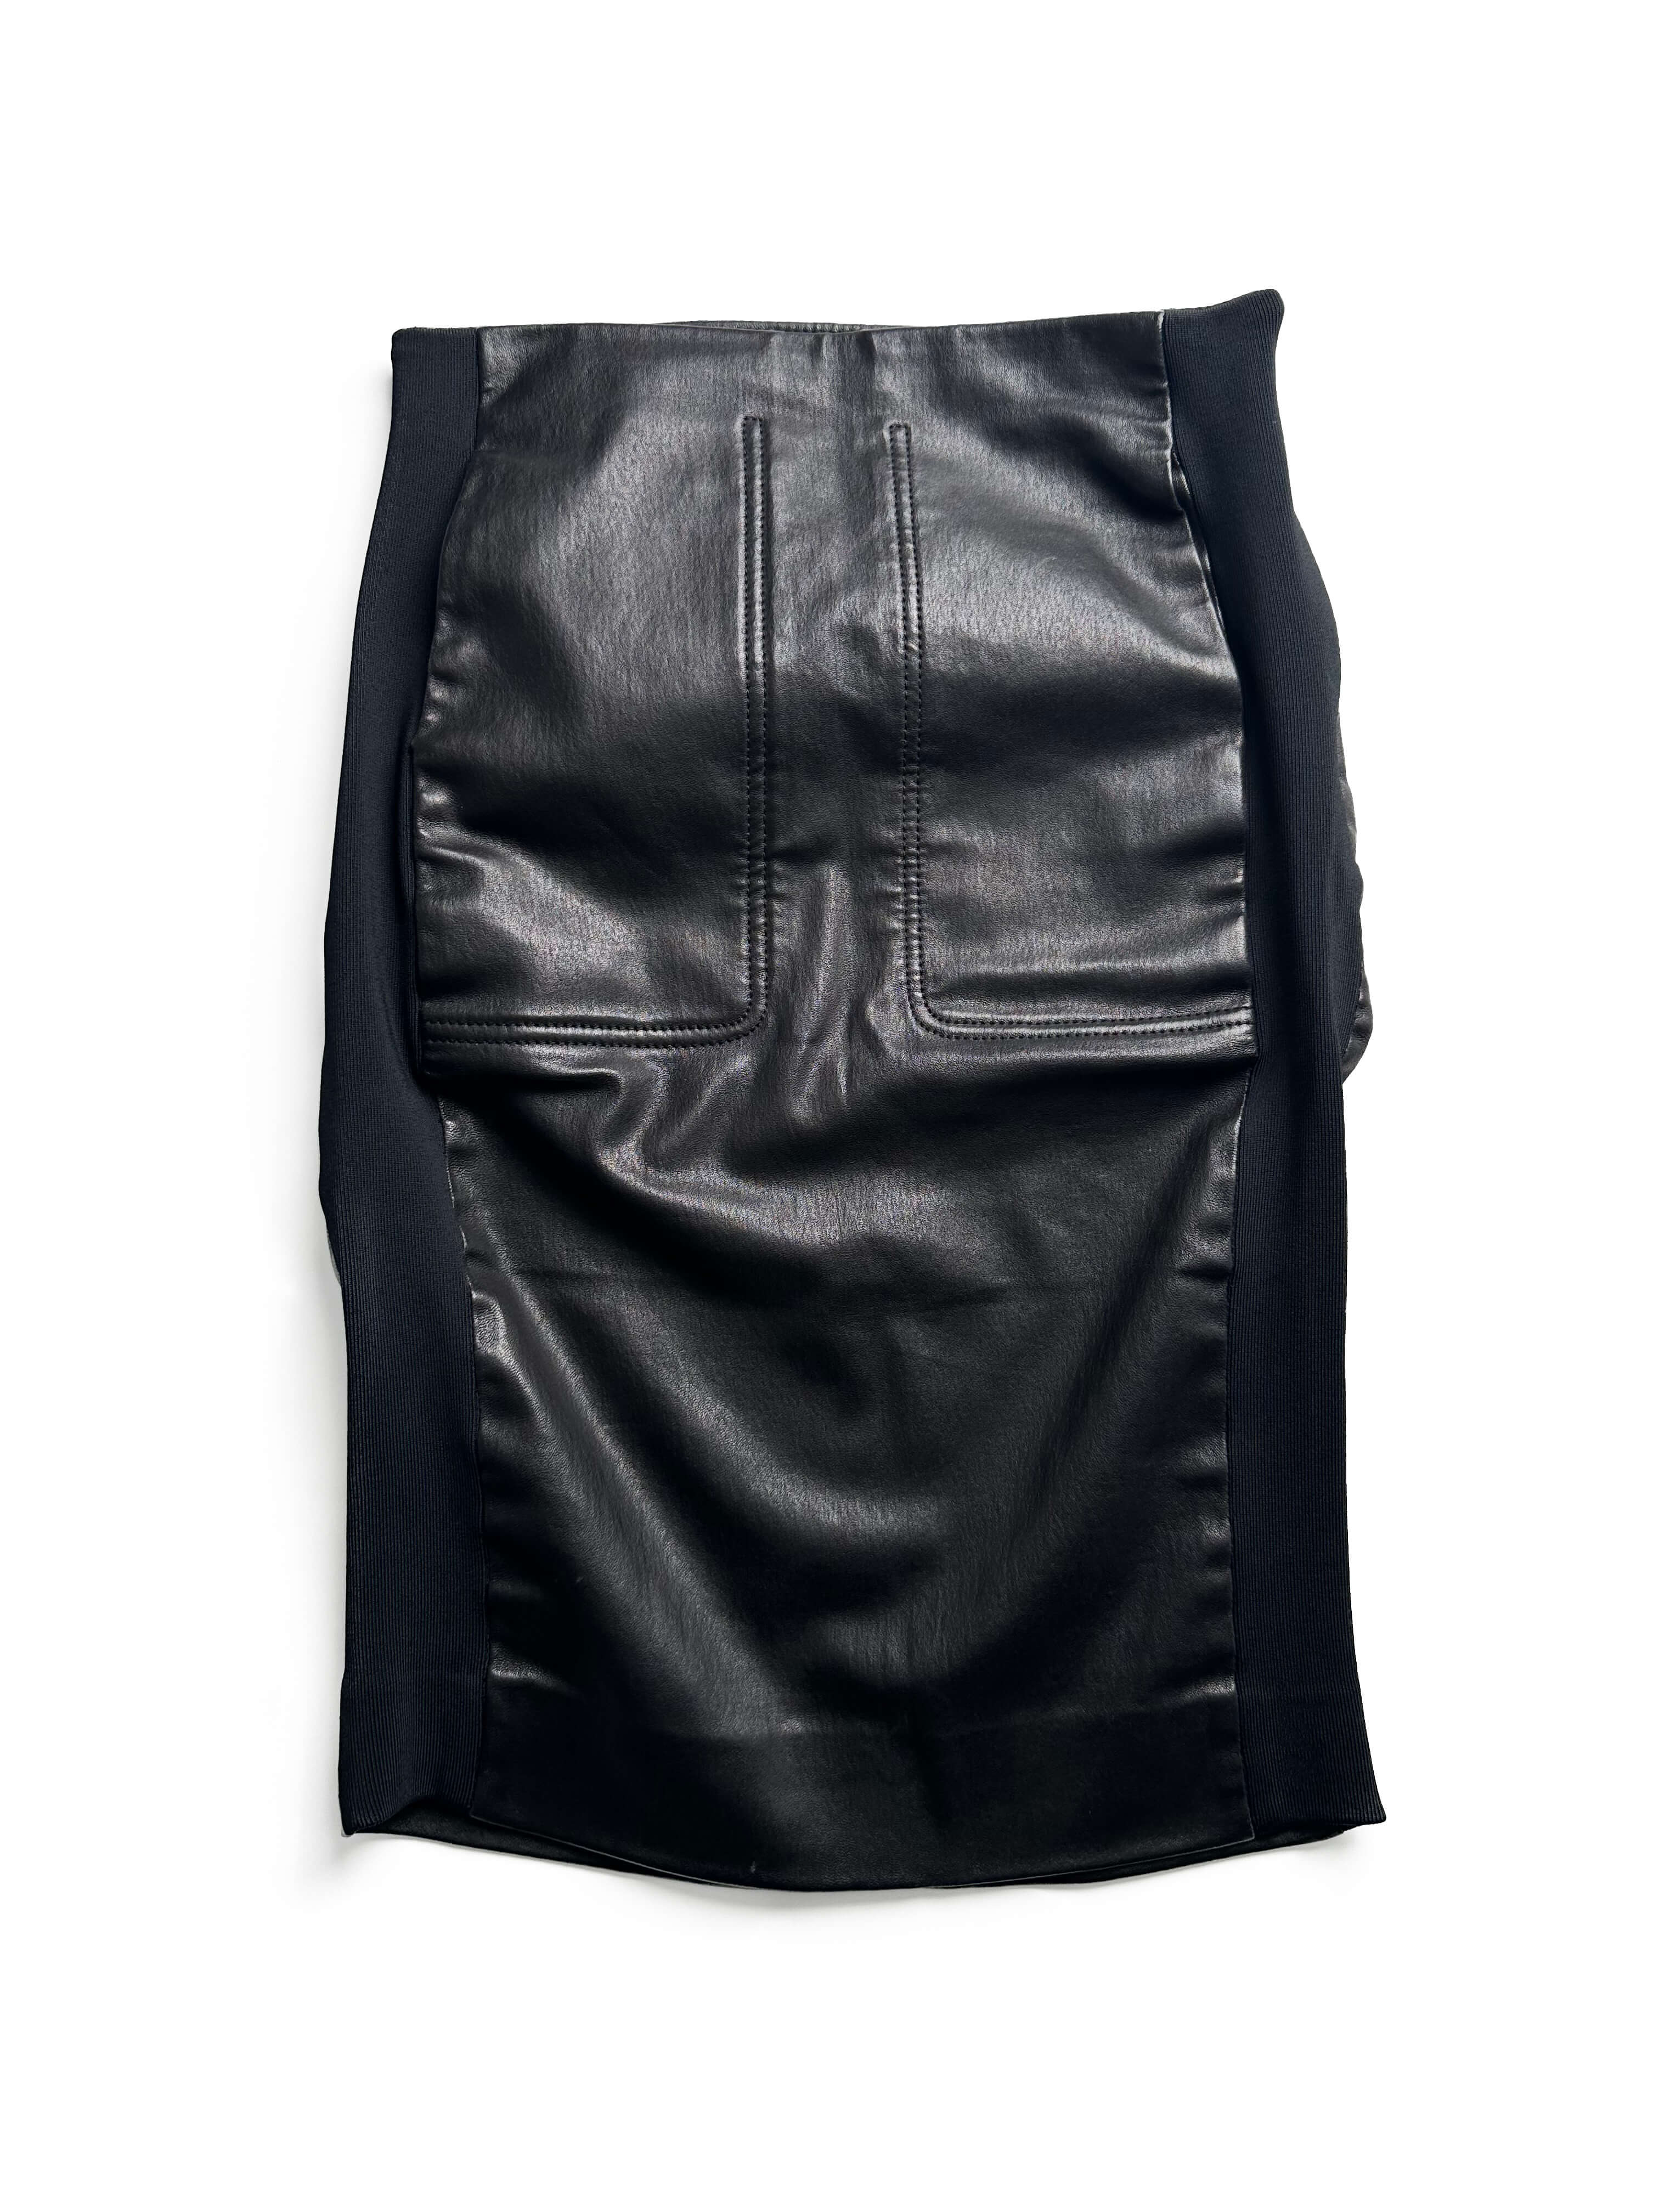 BALENCIAGA 2010s leather skirt